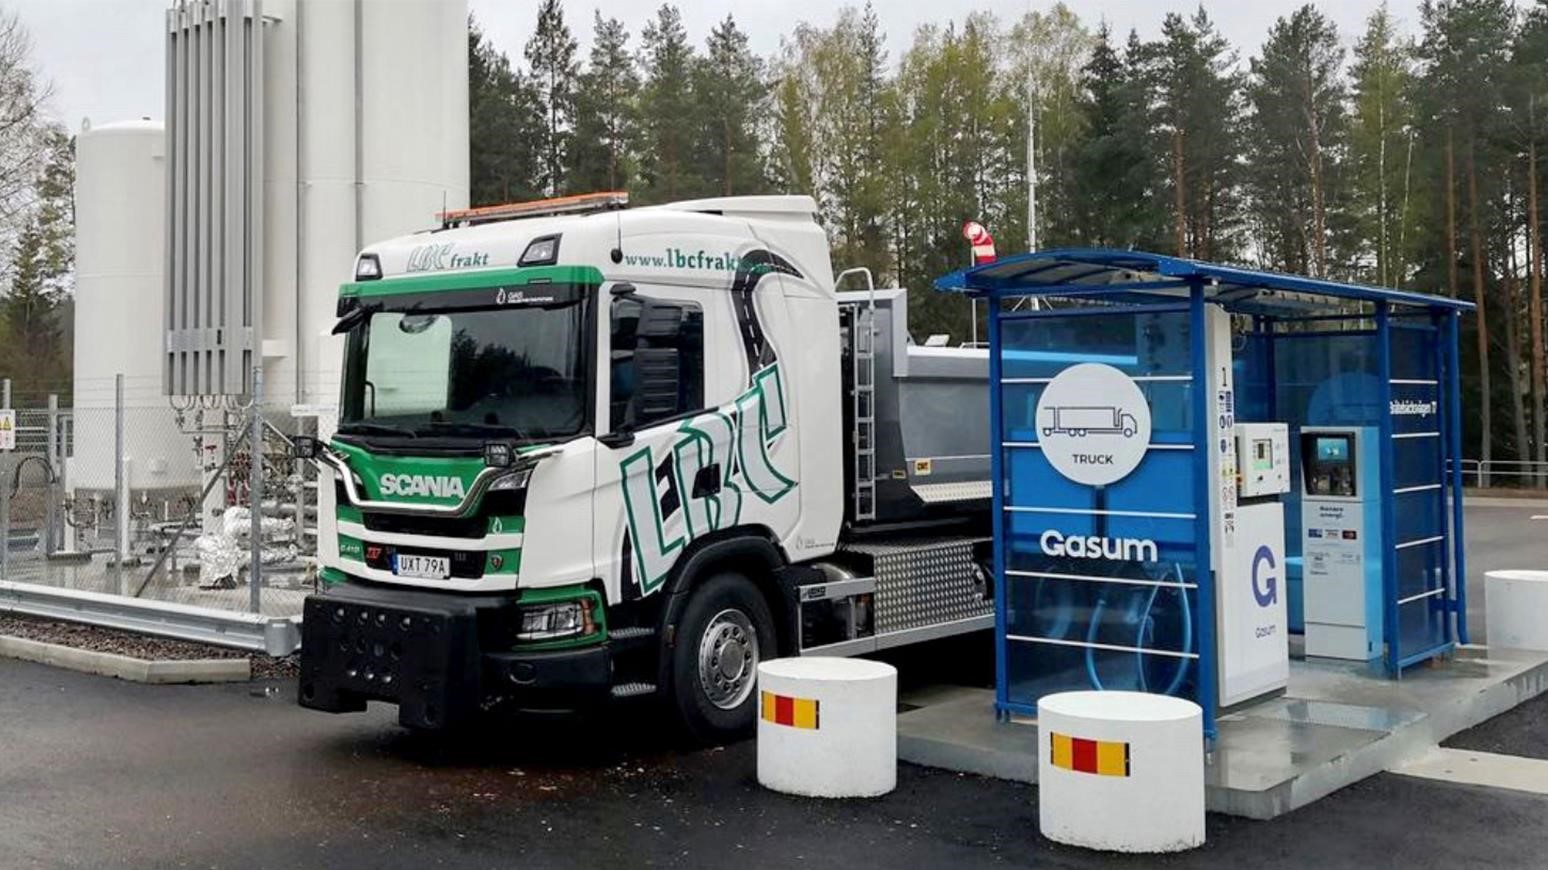 Swedish Haulier LBC Frakt Adds First Liquefied Biogas-Powered Truck To Its Fleet, A Scania G 410 Skip Loader